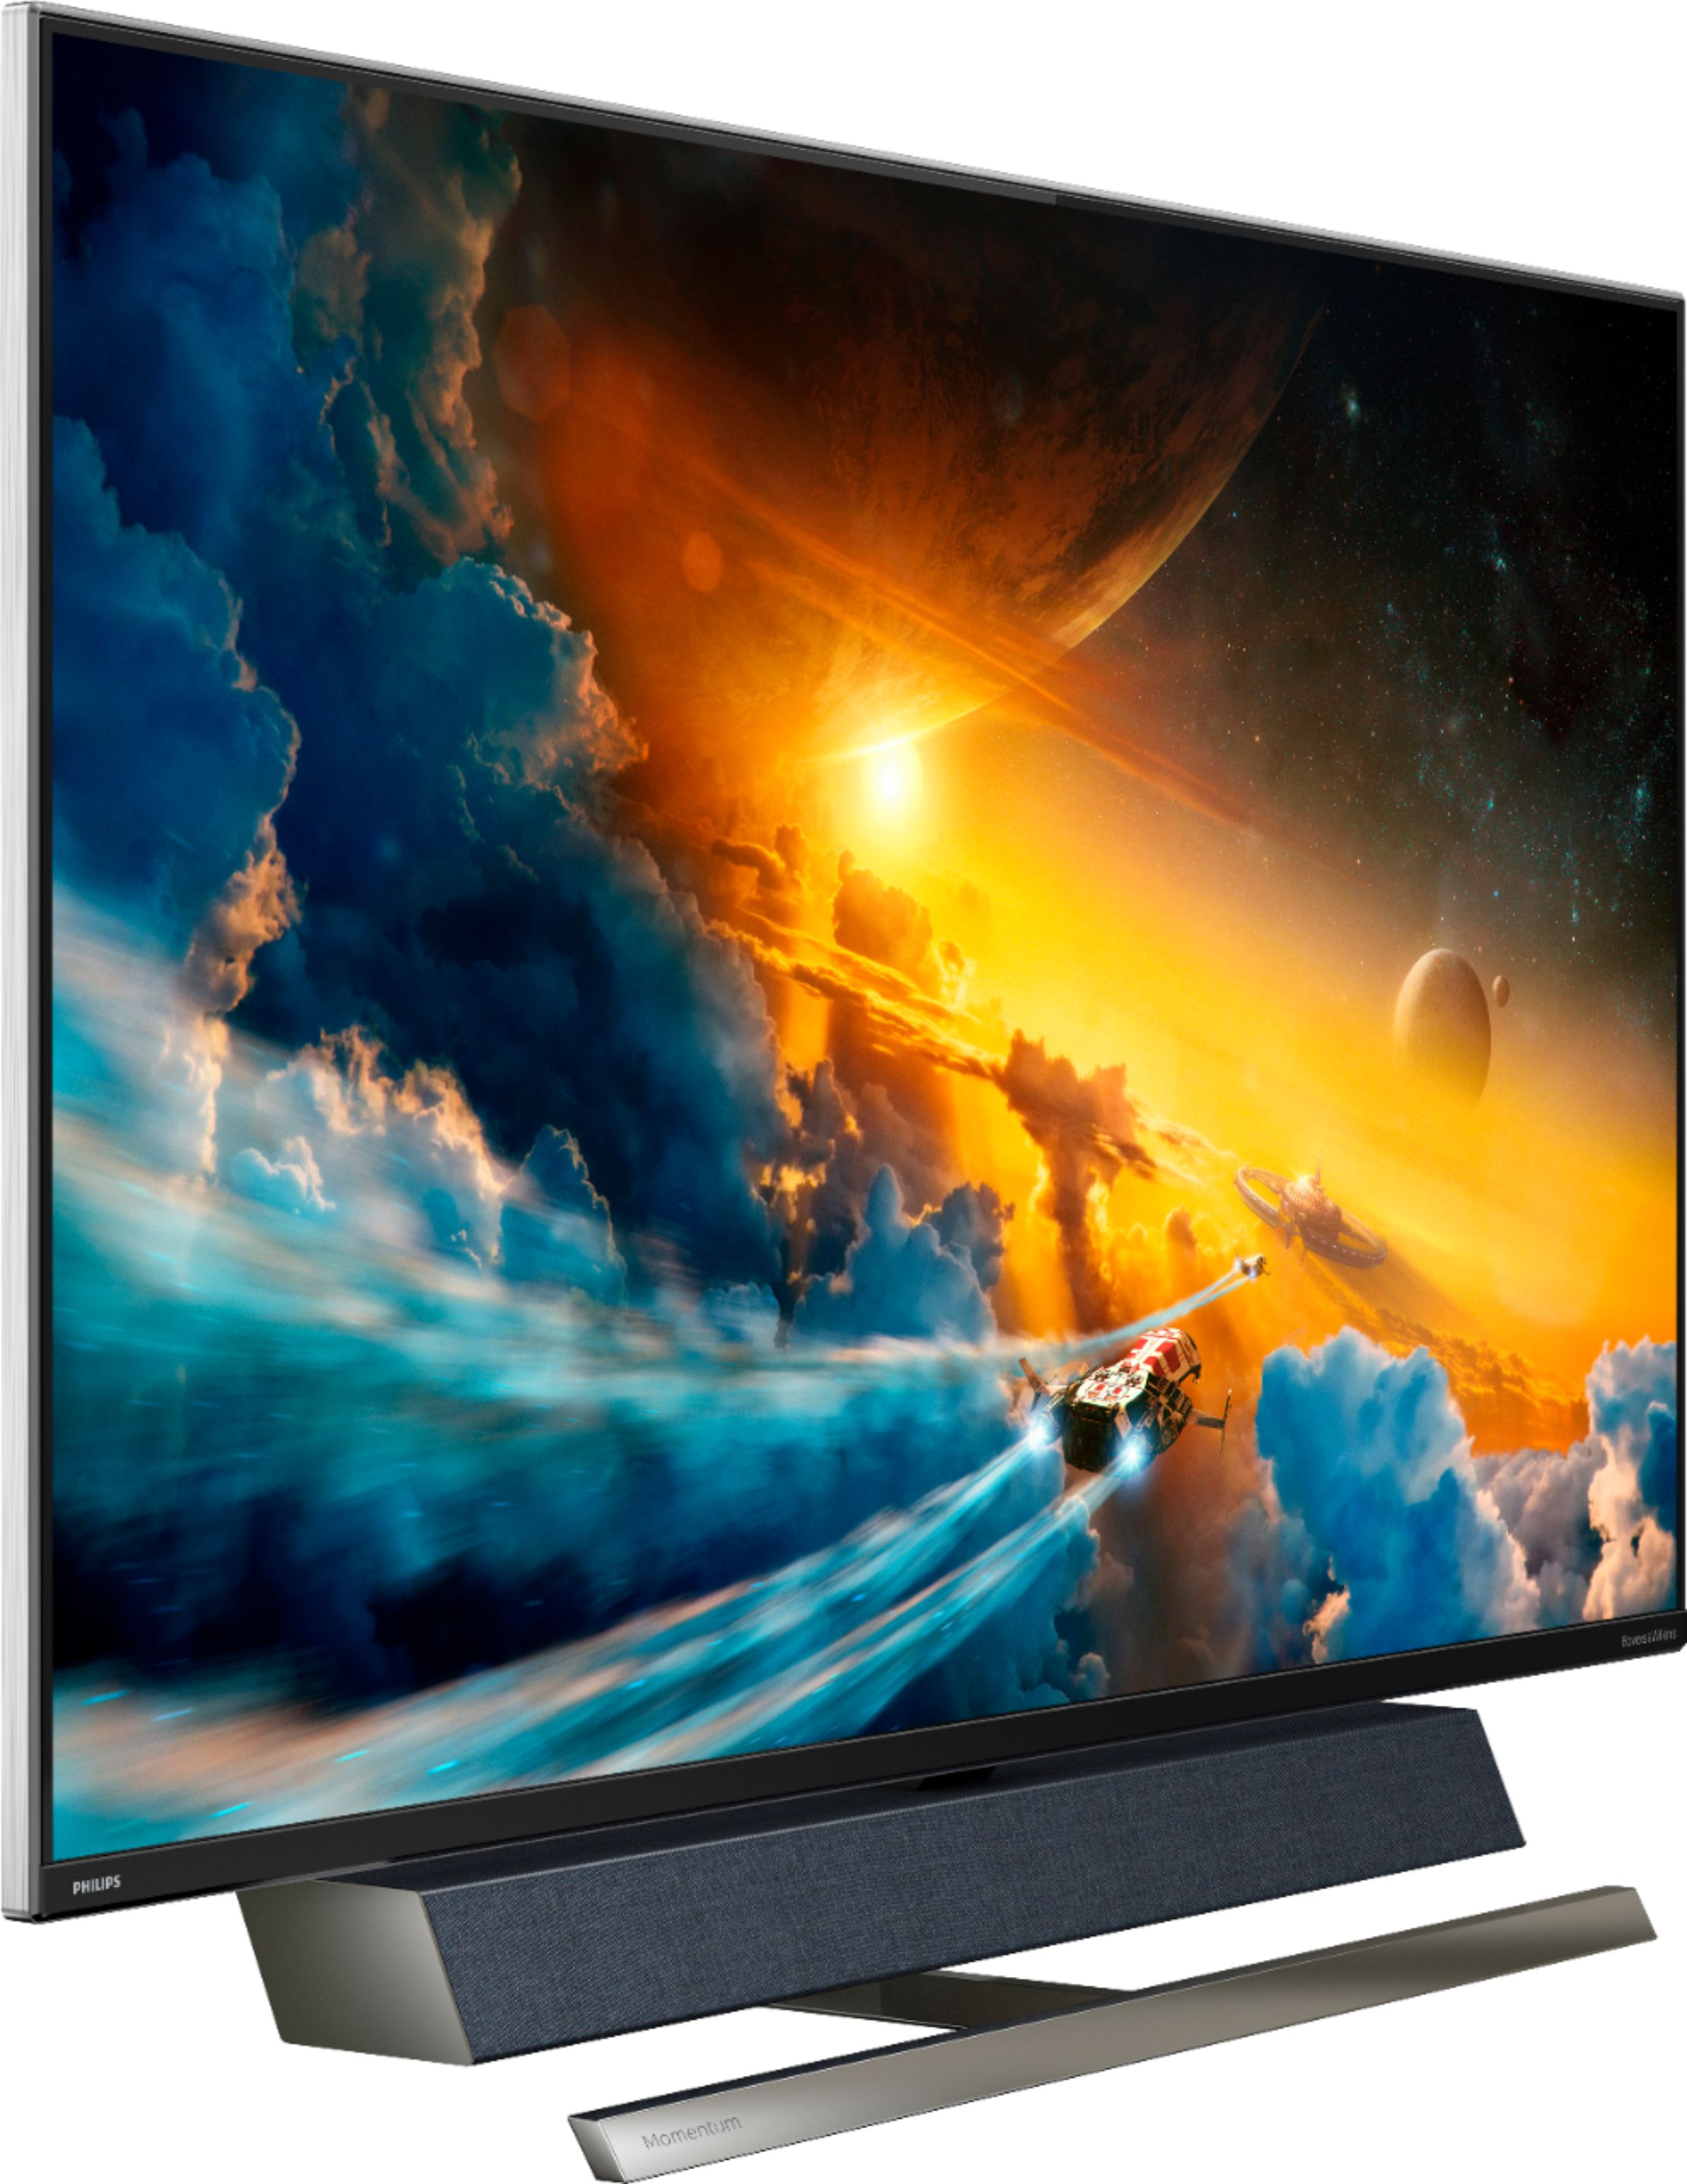 Angle View: Philips - Momentum 558M1RY 55” LED 4K UHD FreeSync Premium Pro Monitor - Black